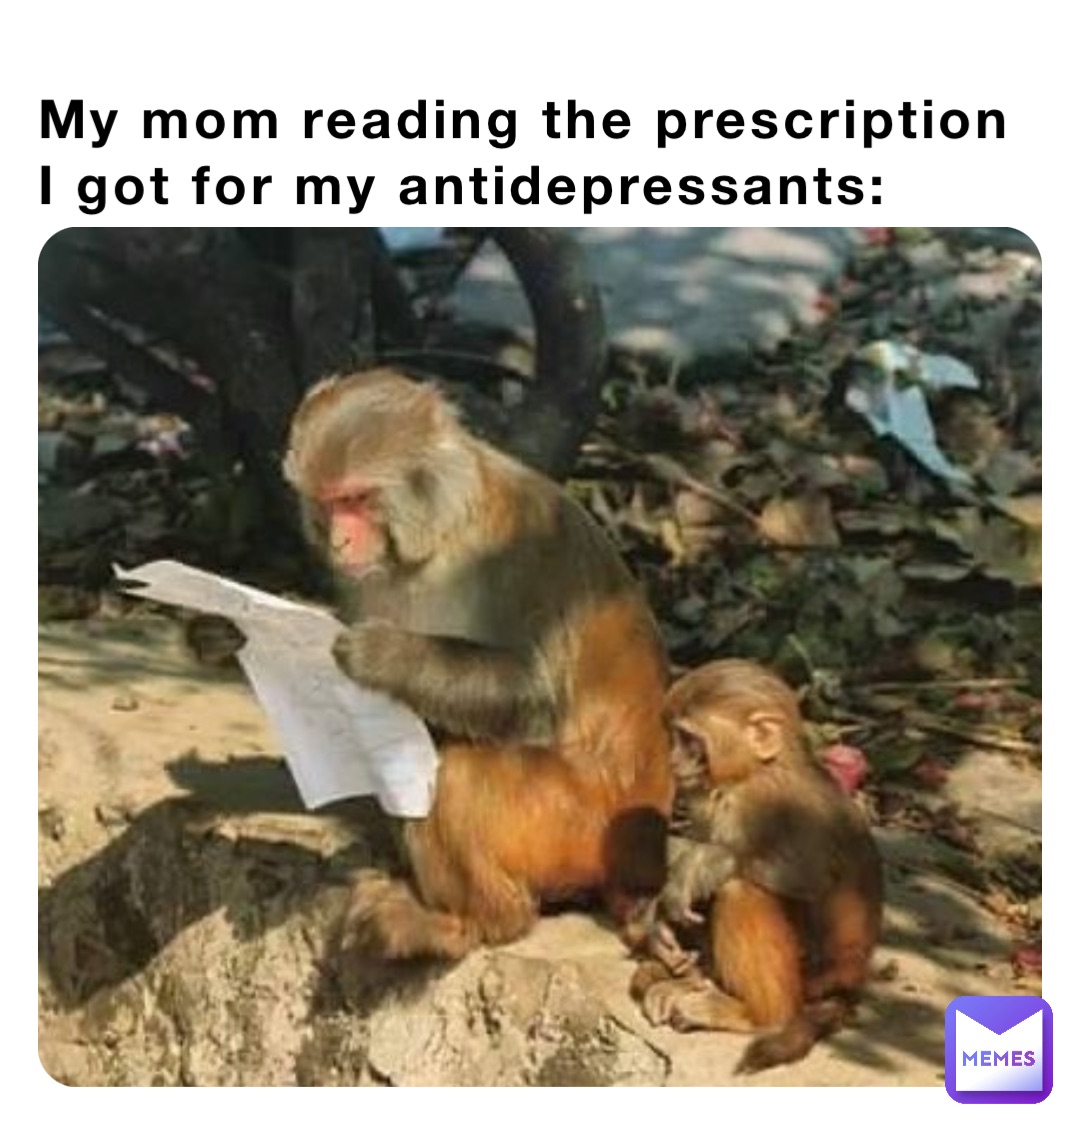 My mom reading the prescription I got for my antidepressants: